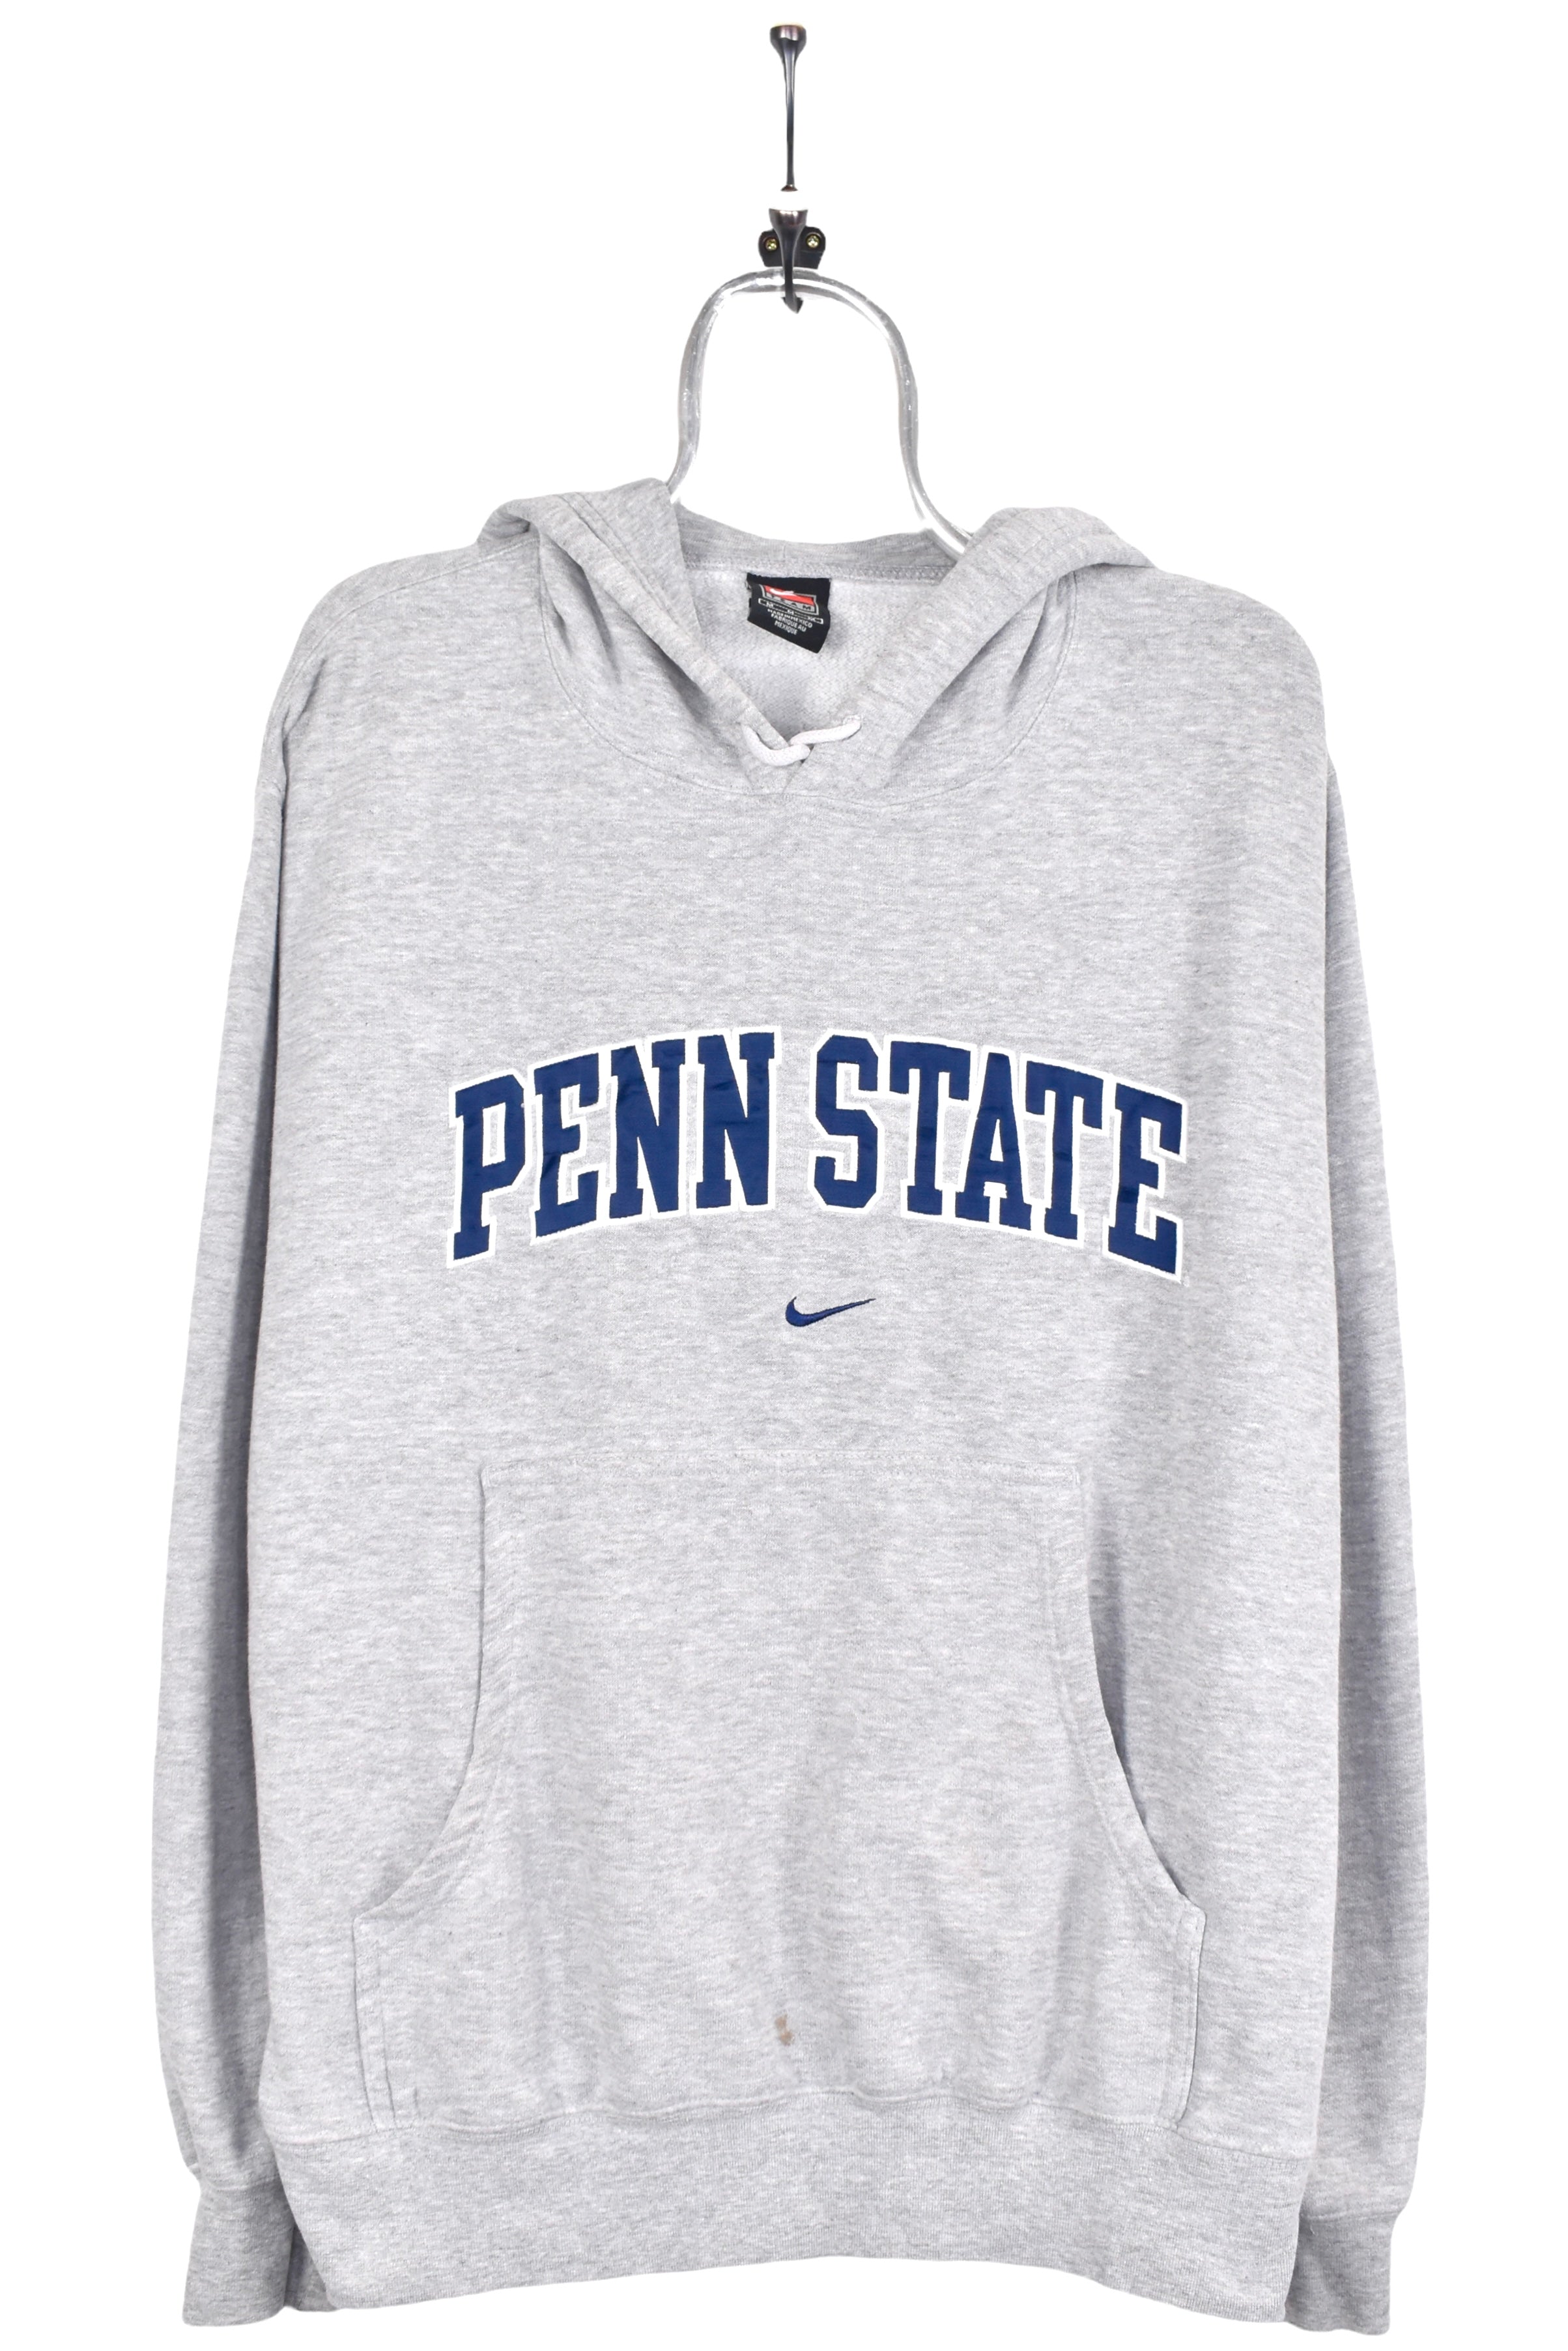 Vintage Penn State University hoodie, grey embroidered sweatshirt - AU Large COLLEGE